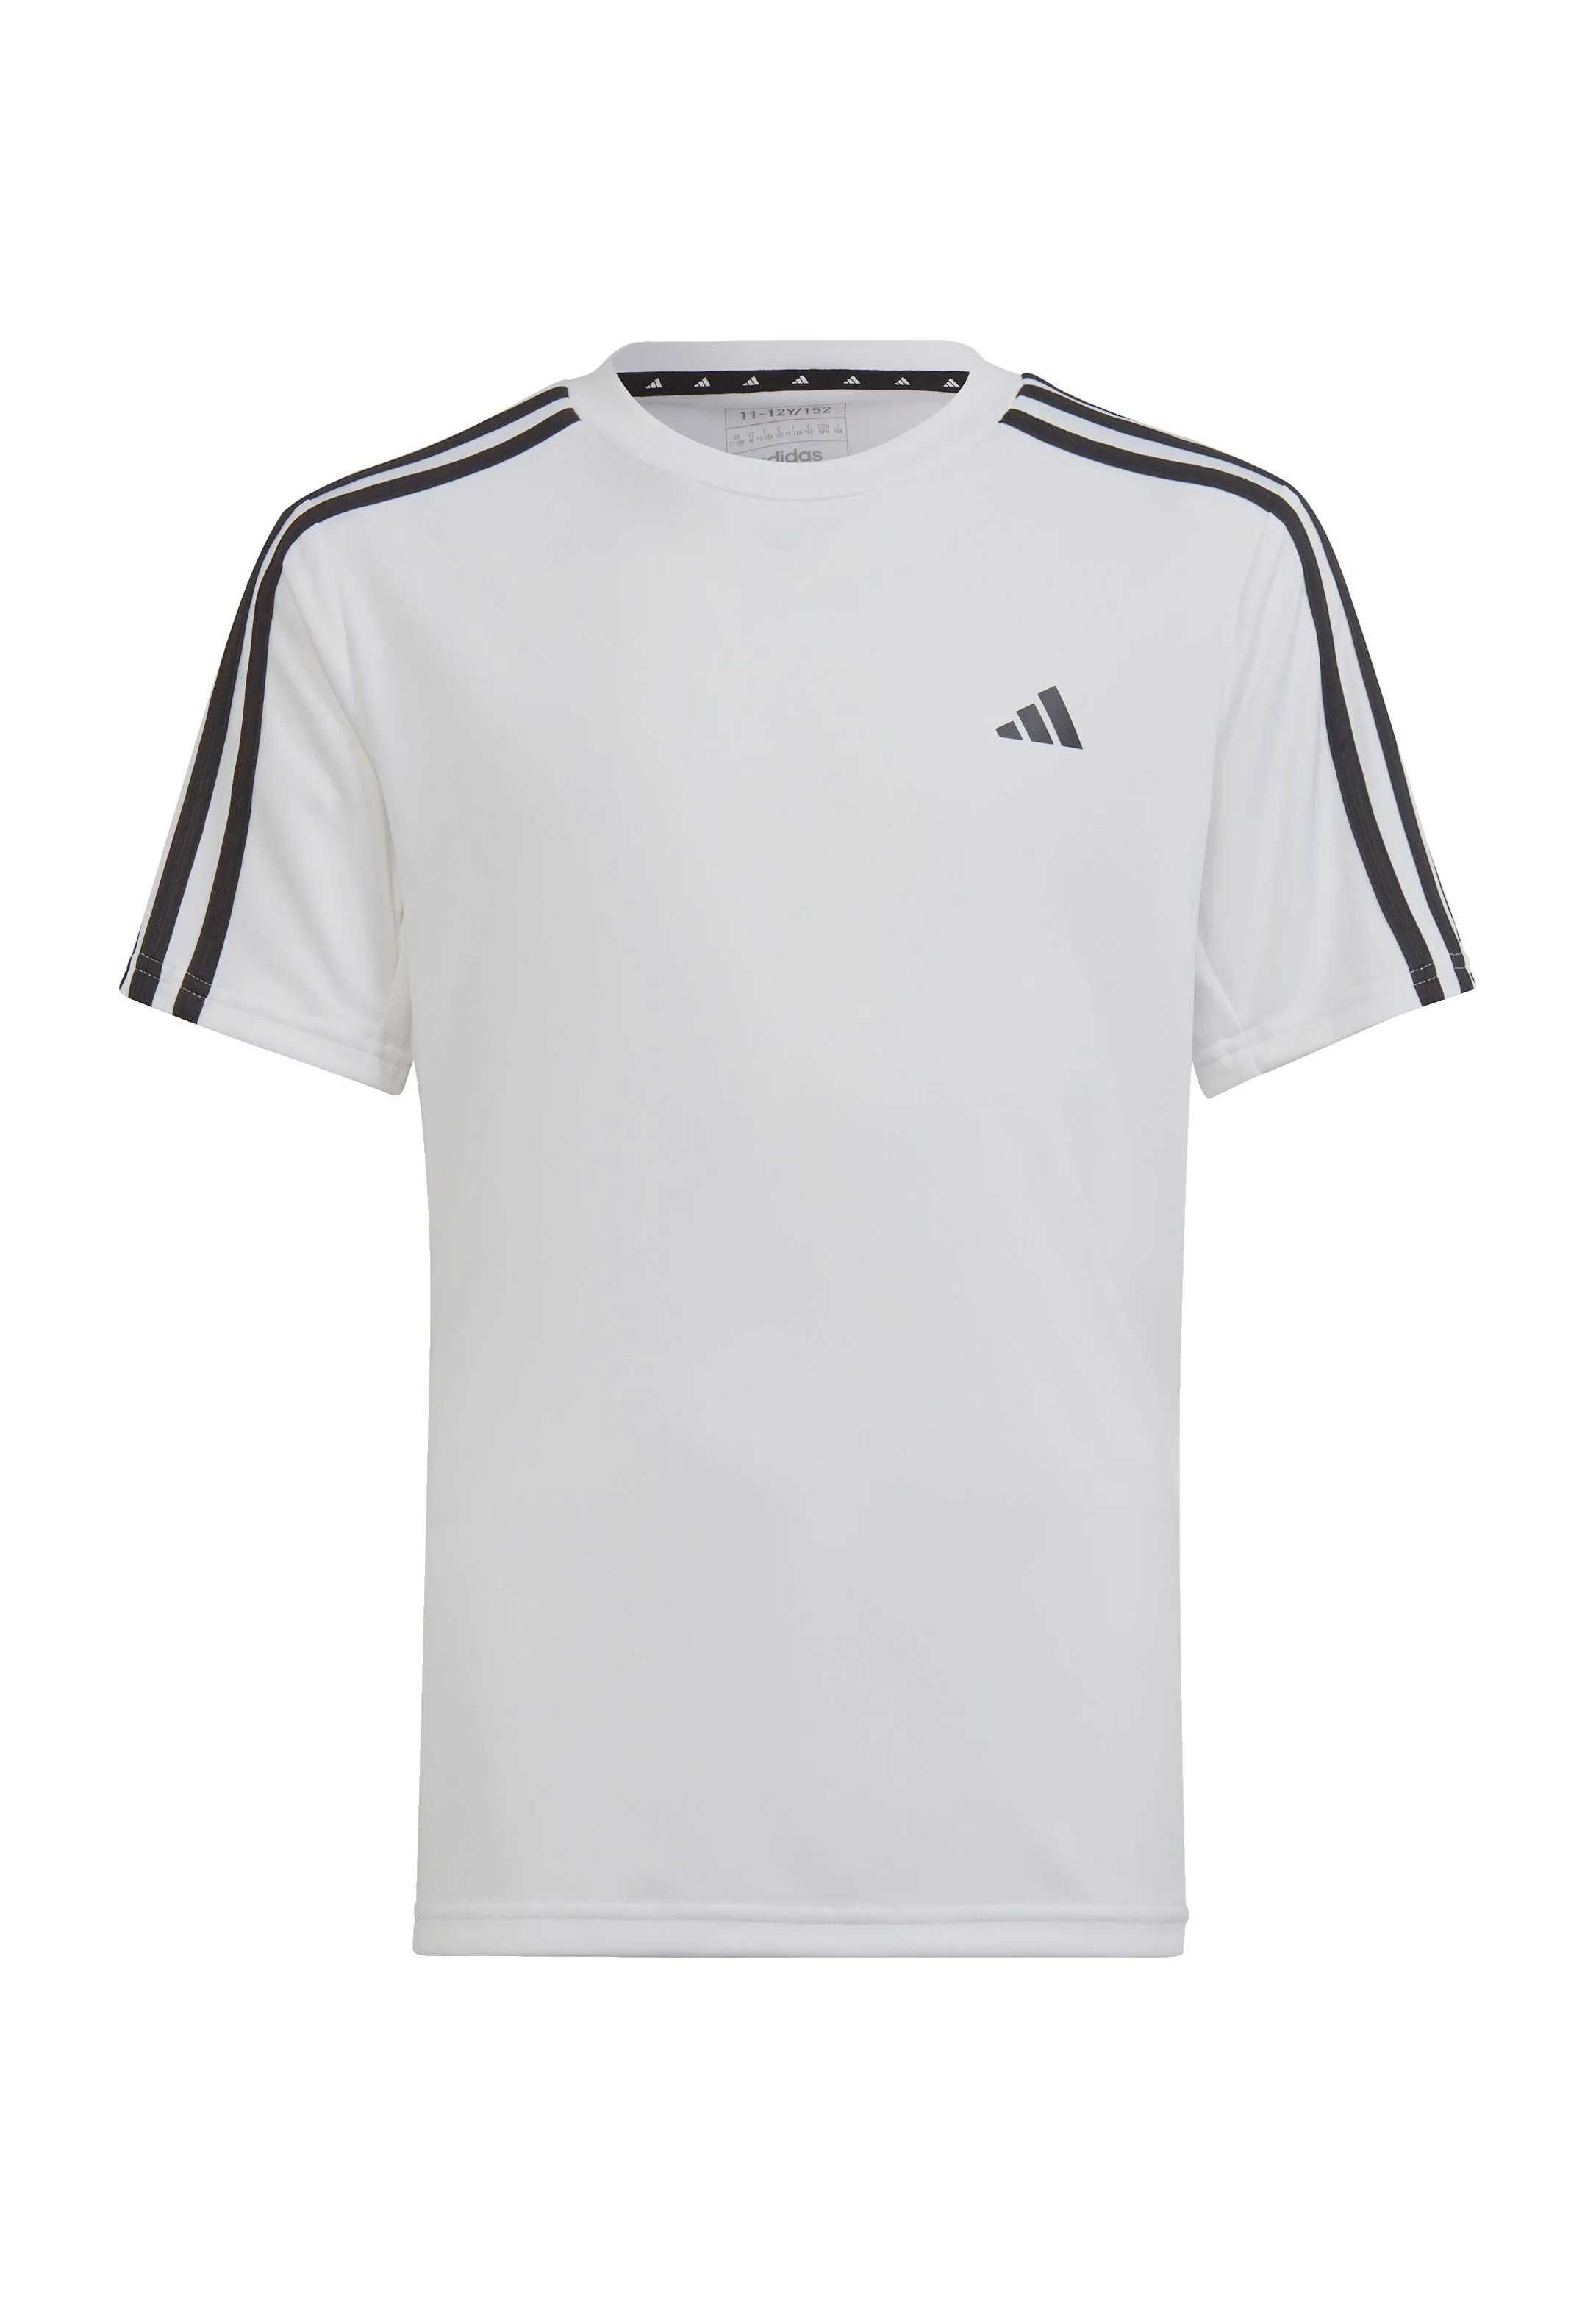 Koszulka ADIDAS Train essentials 3-Stripes biała roz. 176 cm